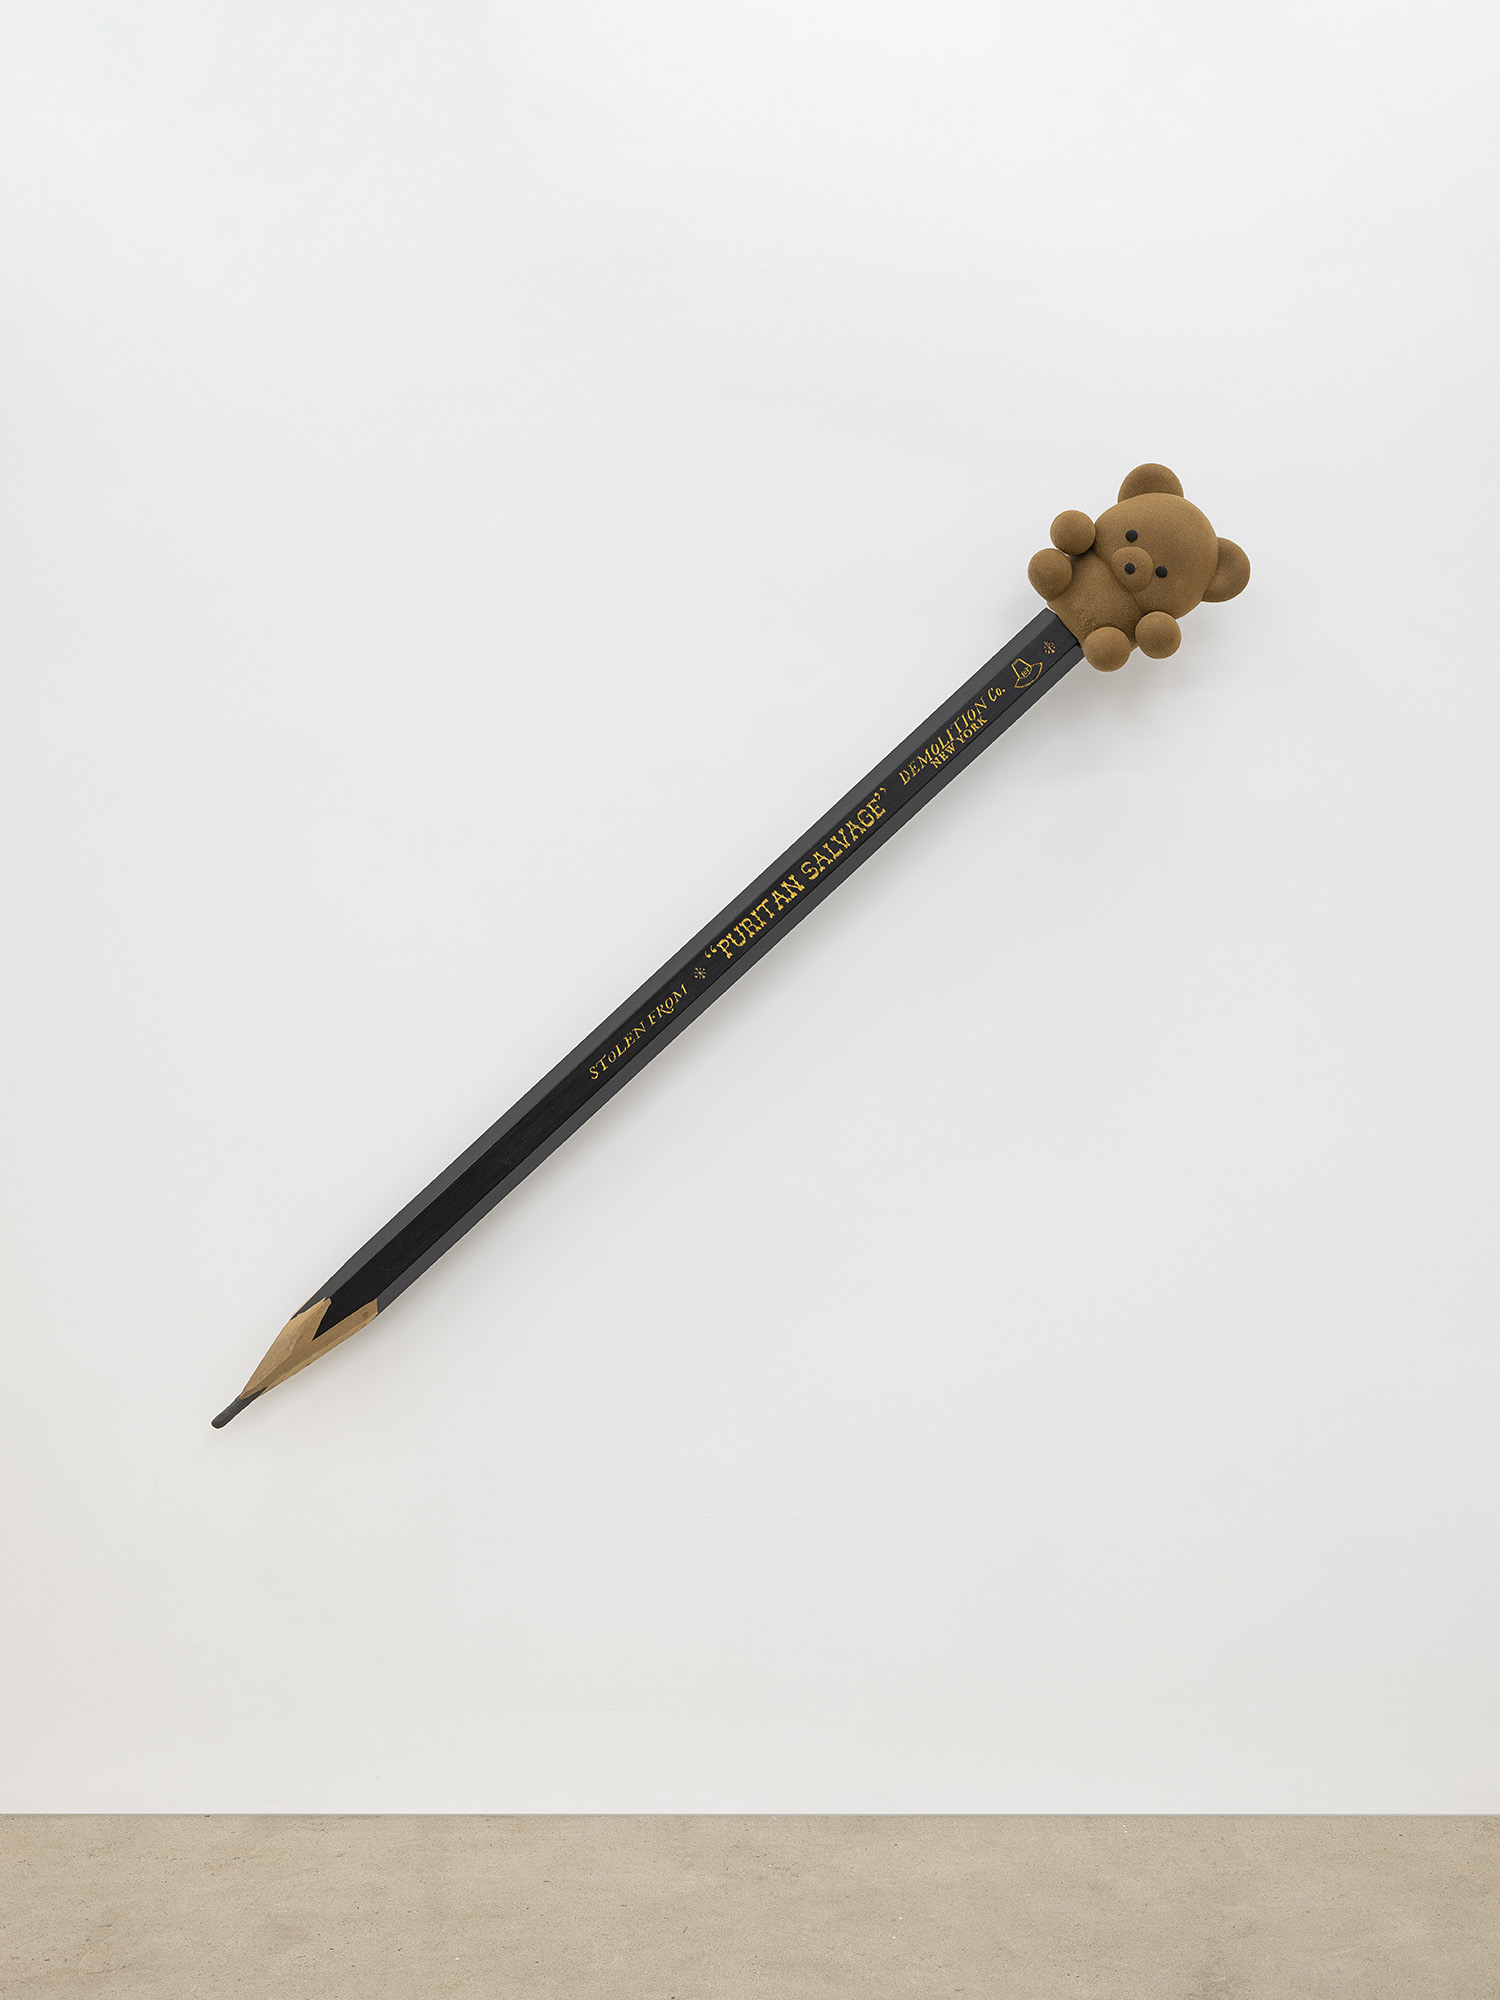 Sydney Shen, This Pencil Was Stolen From Puritan Salvage Demolition Co., 2021